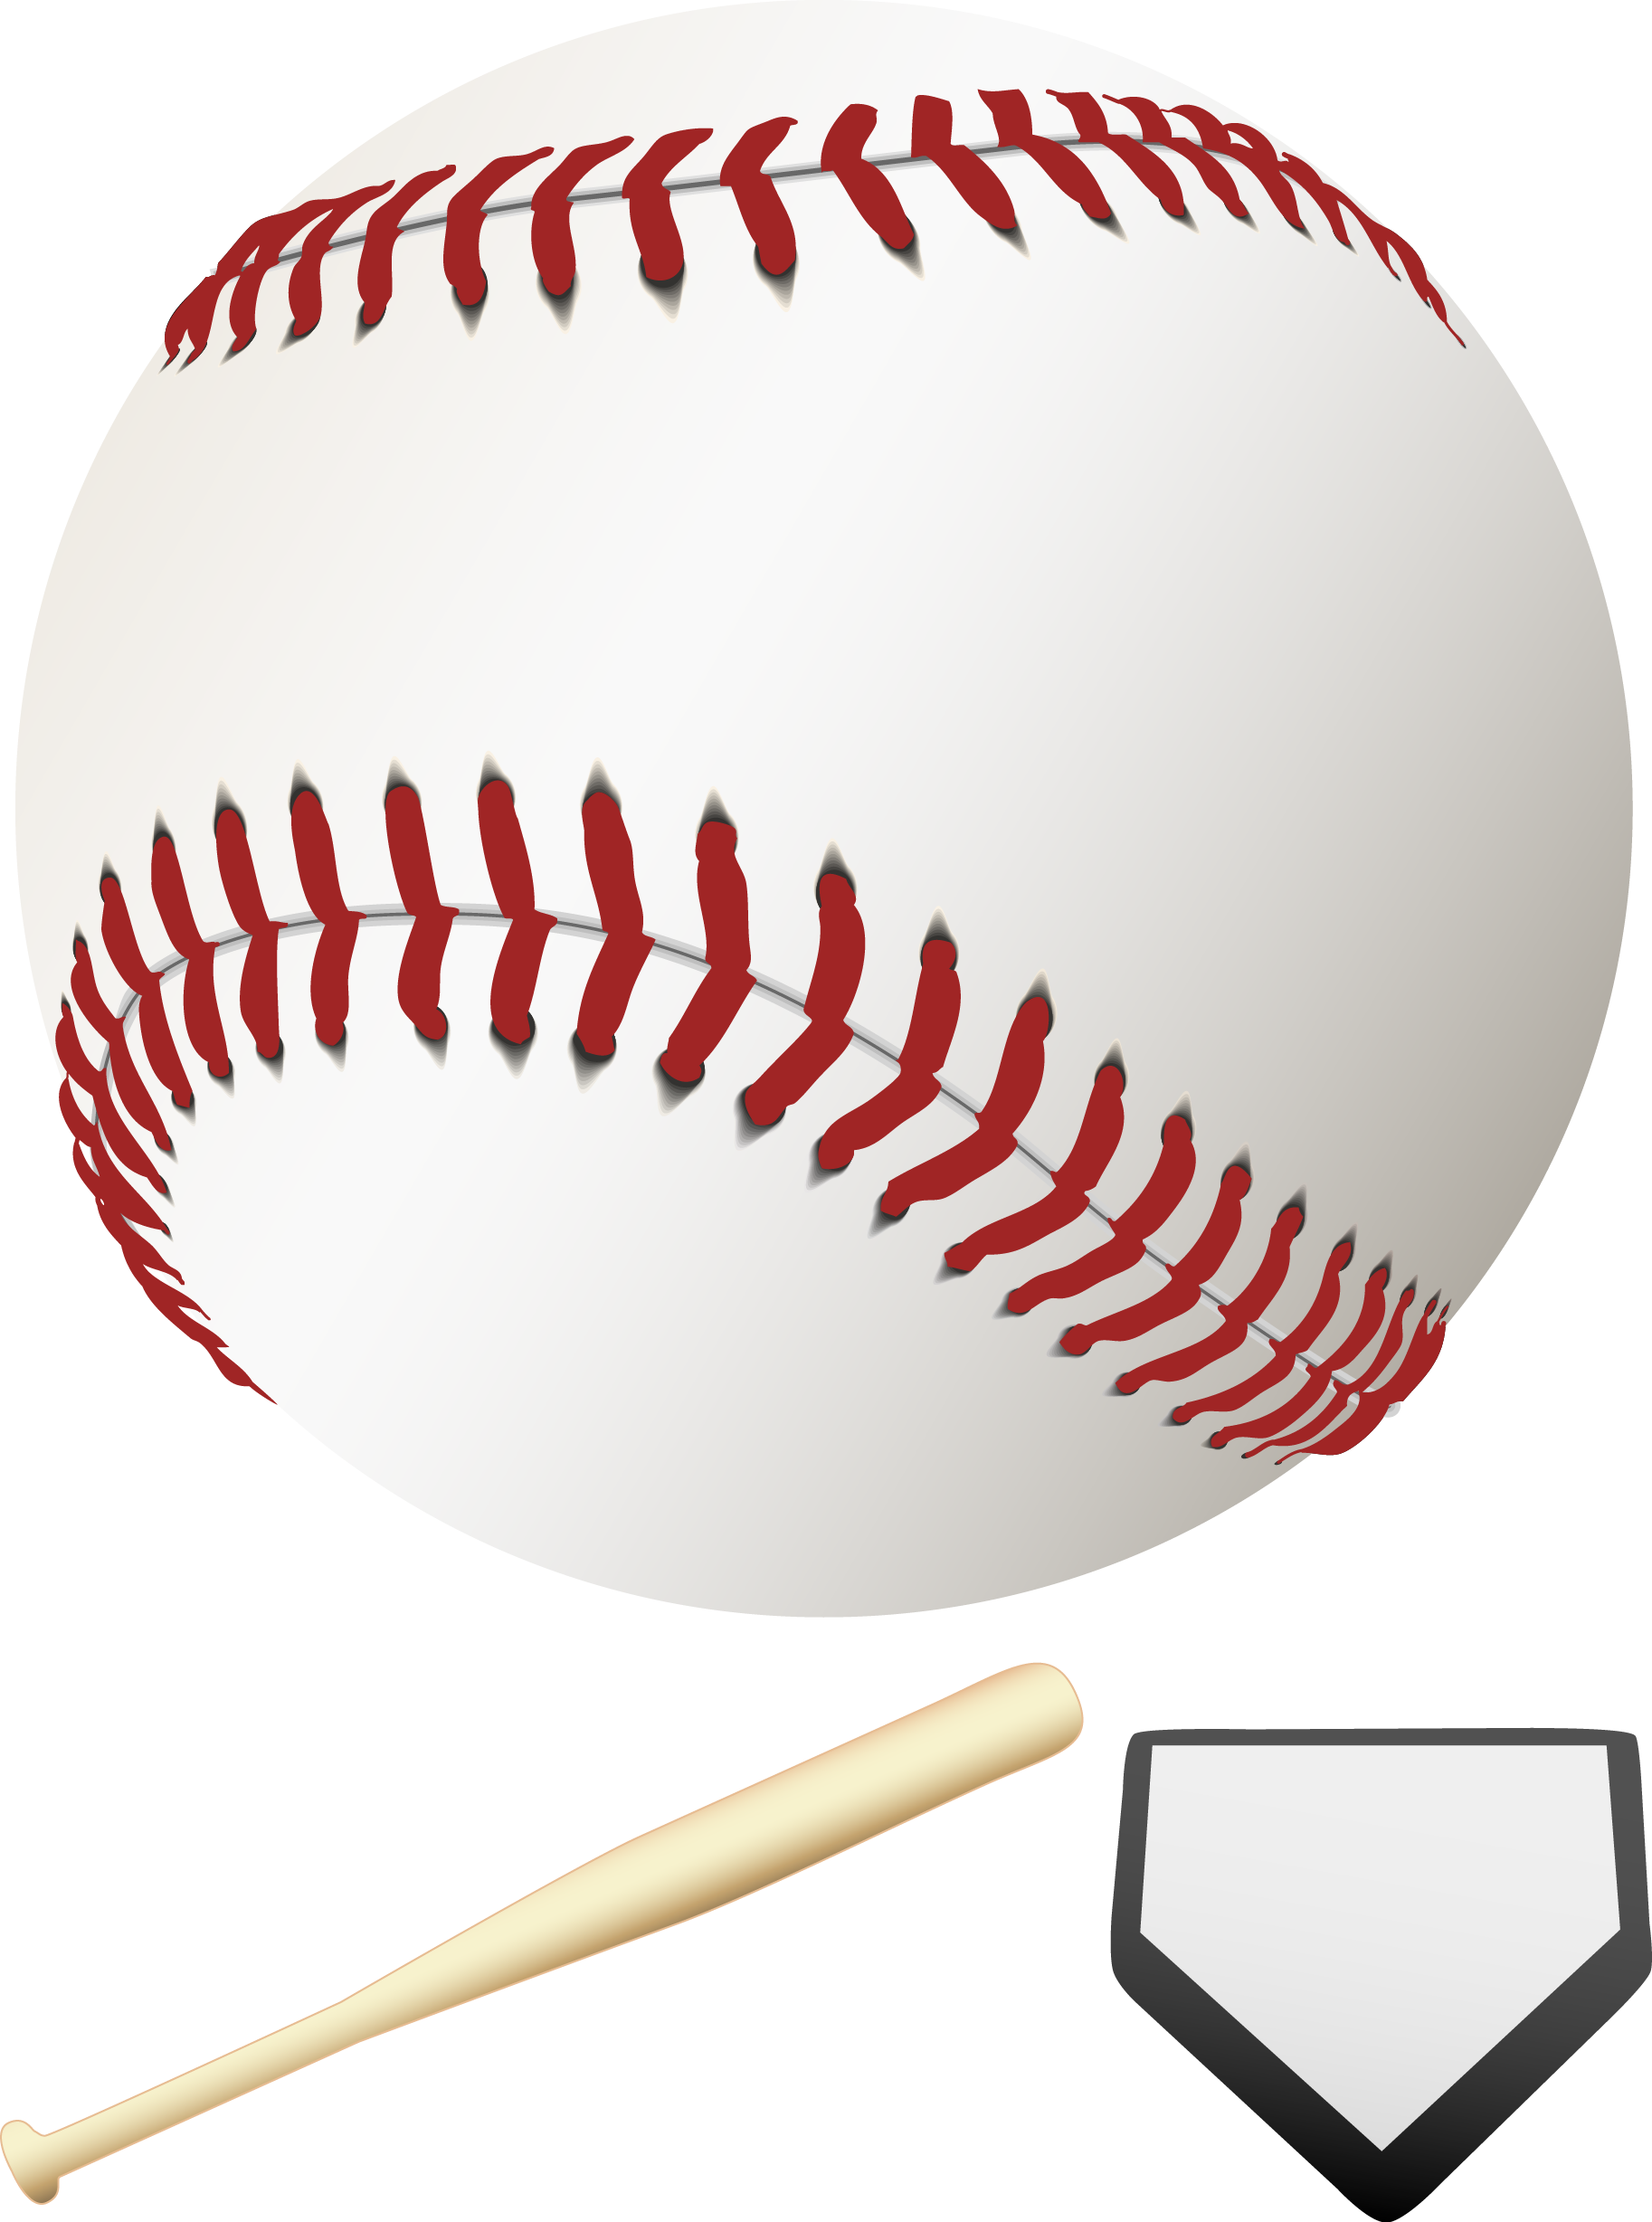 A Baseball And A Bat